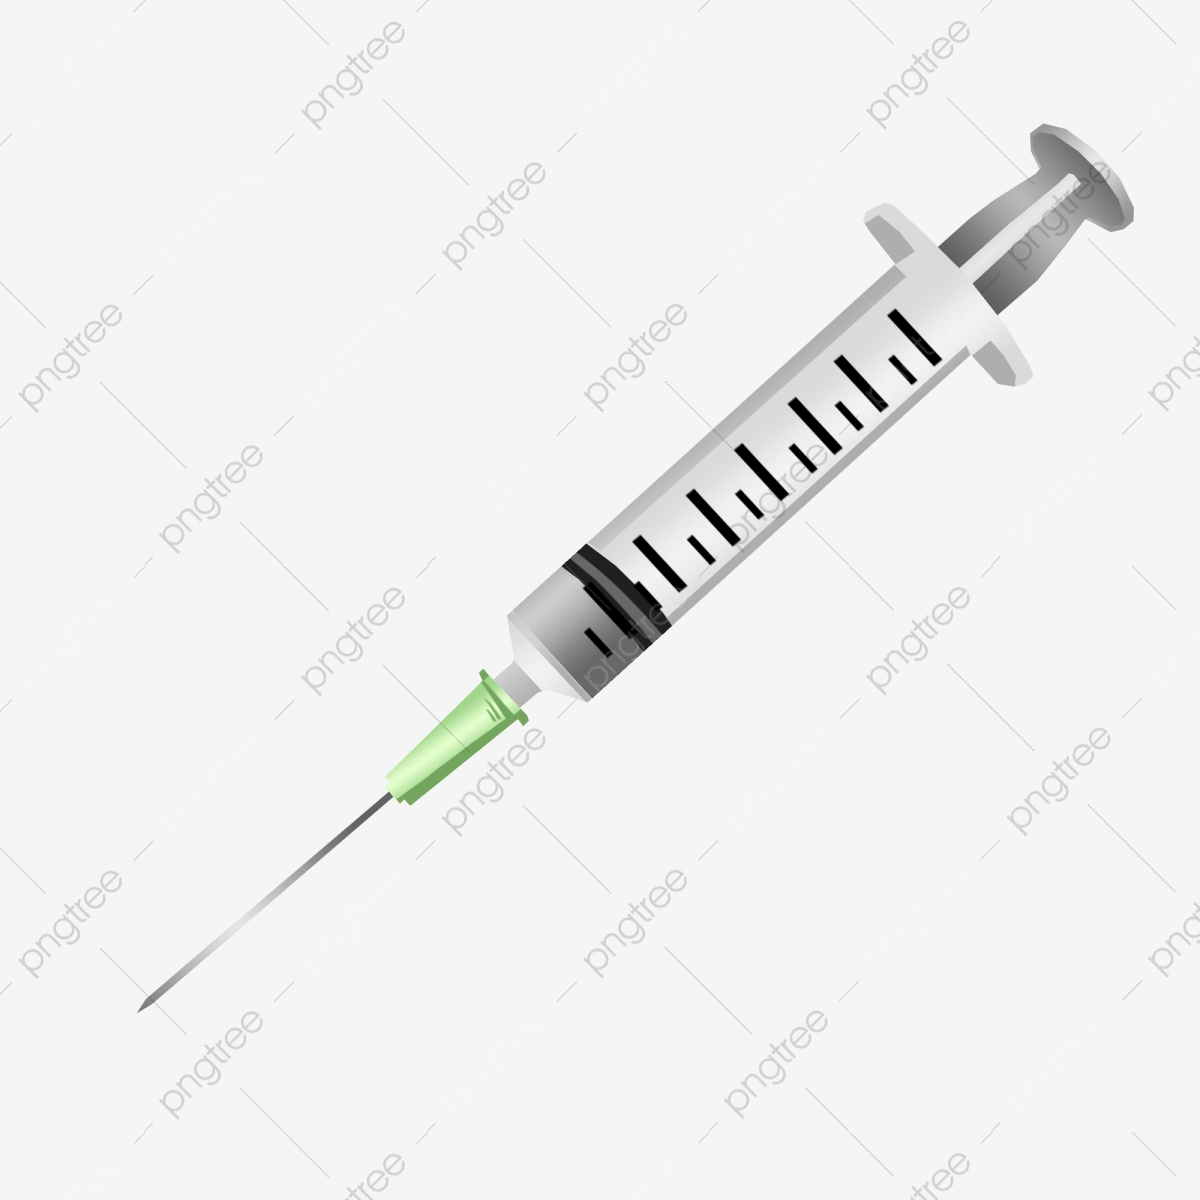 Syringe clipart medical technology, Picture #3187845 syringe clipart ...